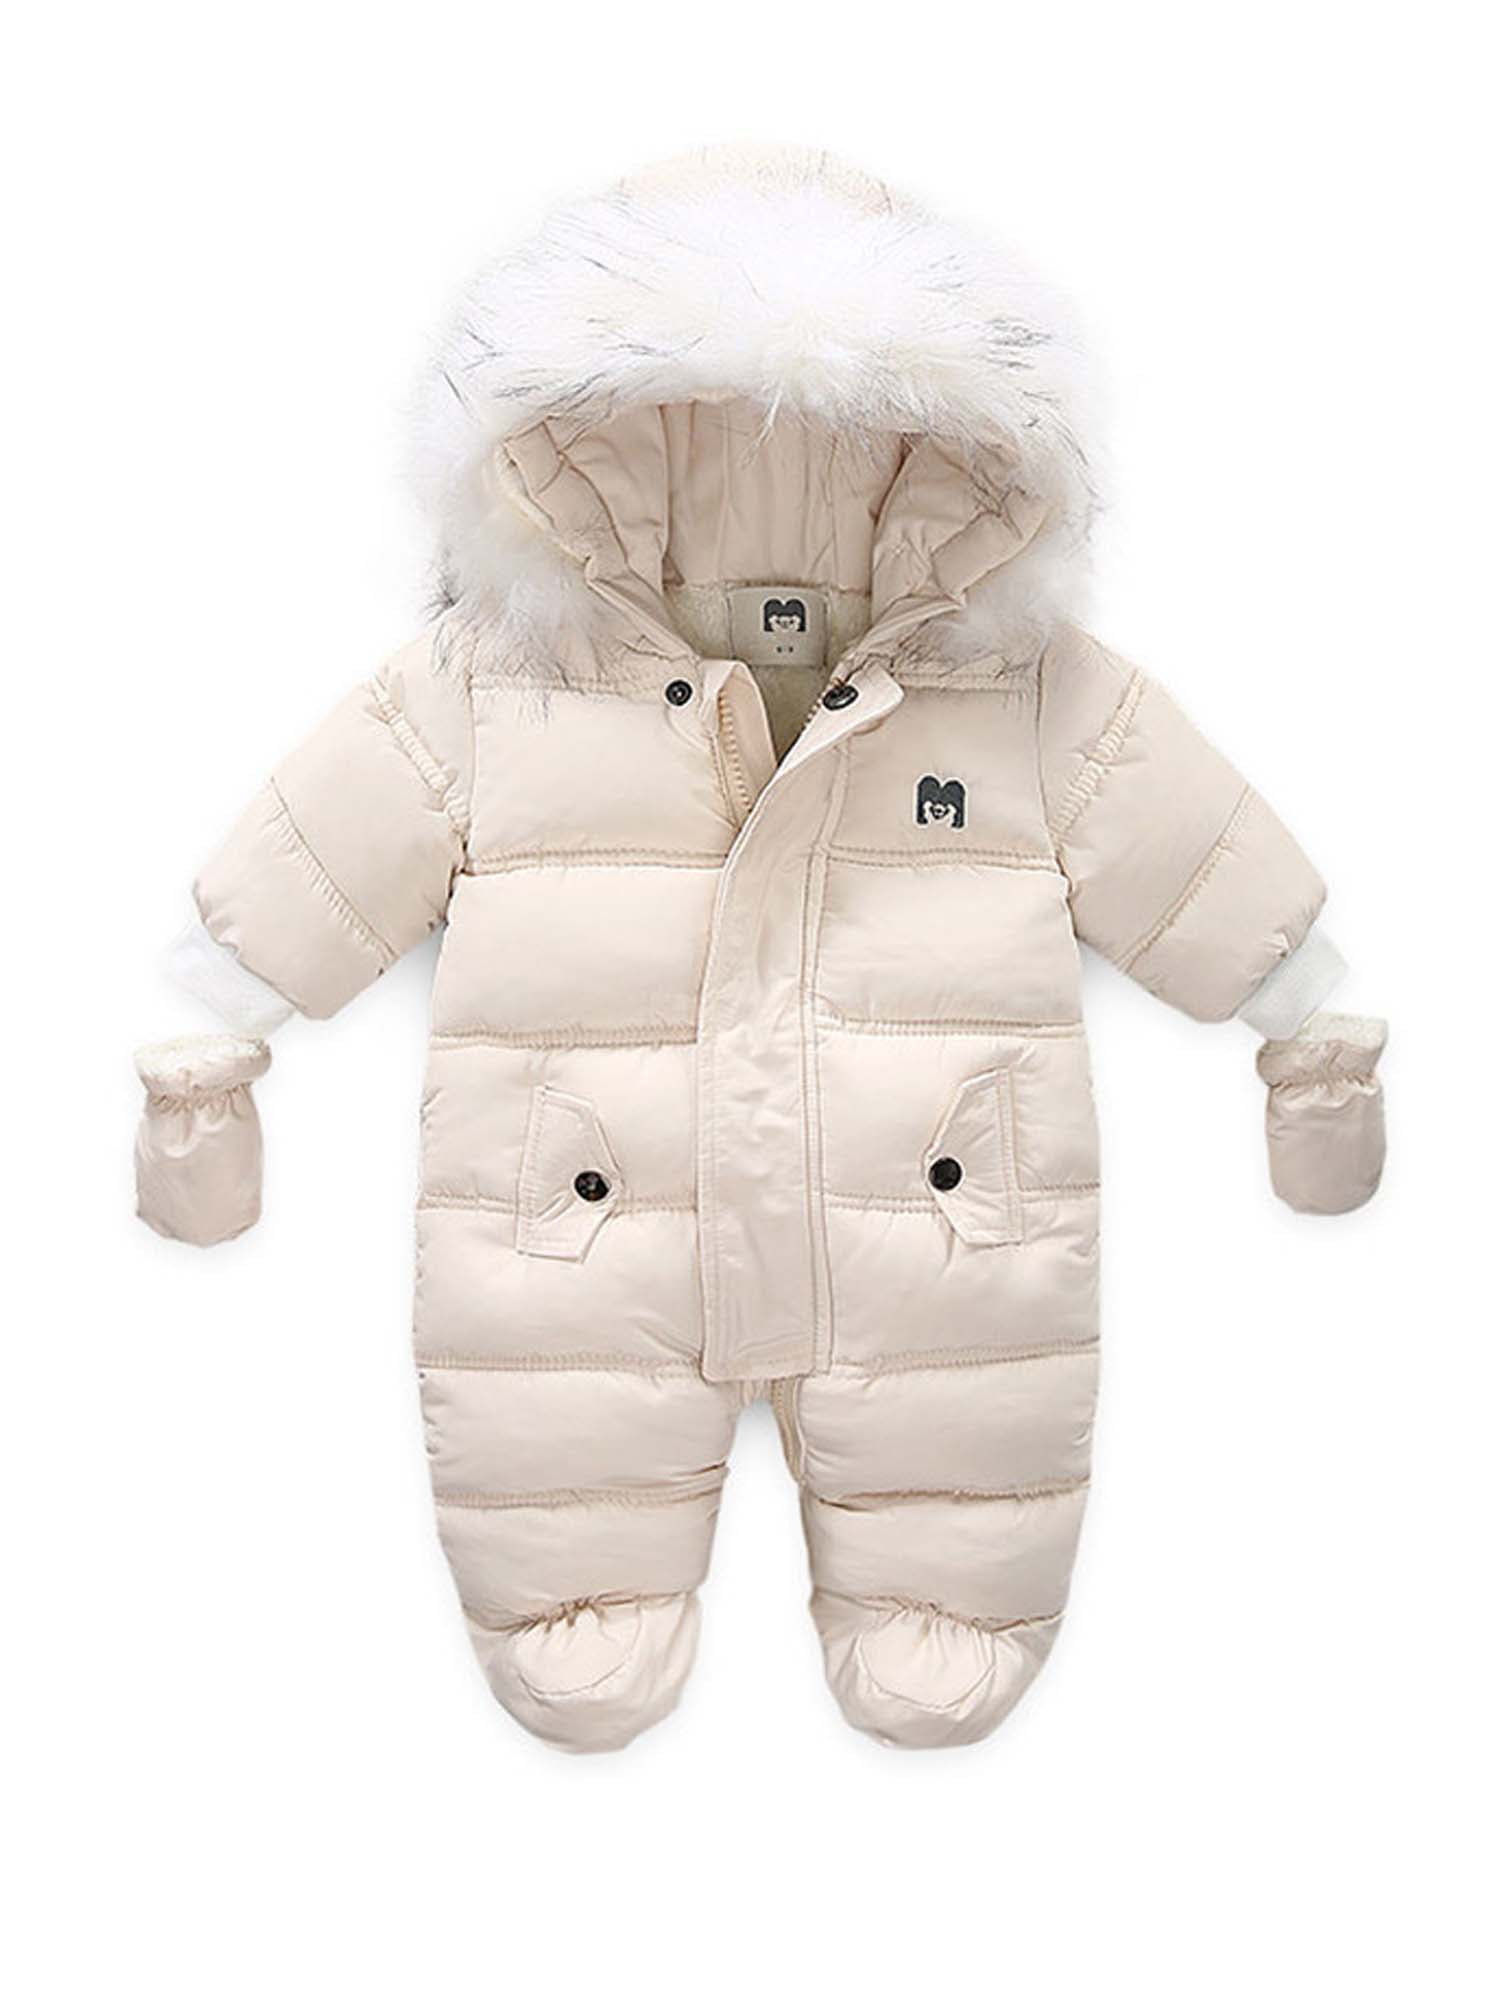 Gloves WALLARENEAR Infant Baby Boys Girls Winter Snowsuit Romper Hoodied Footie Outwear Toddler Jumpsuit Down Coat Jacket 